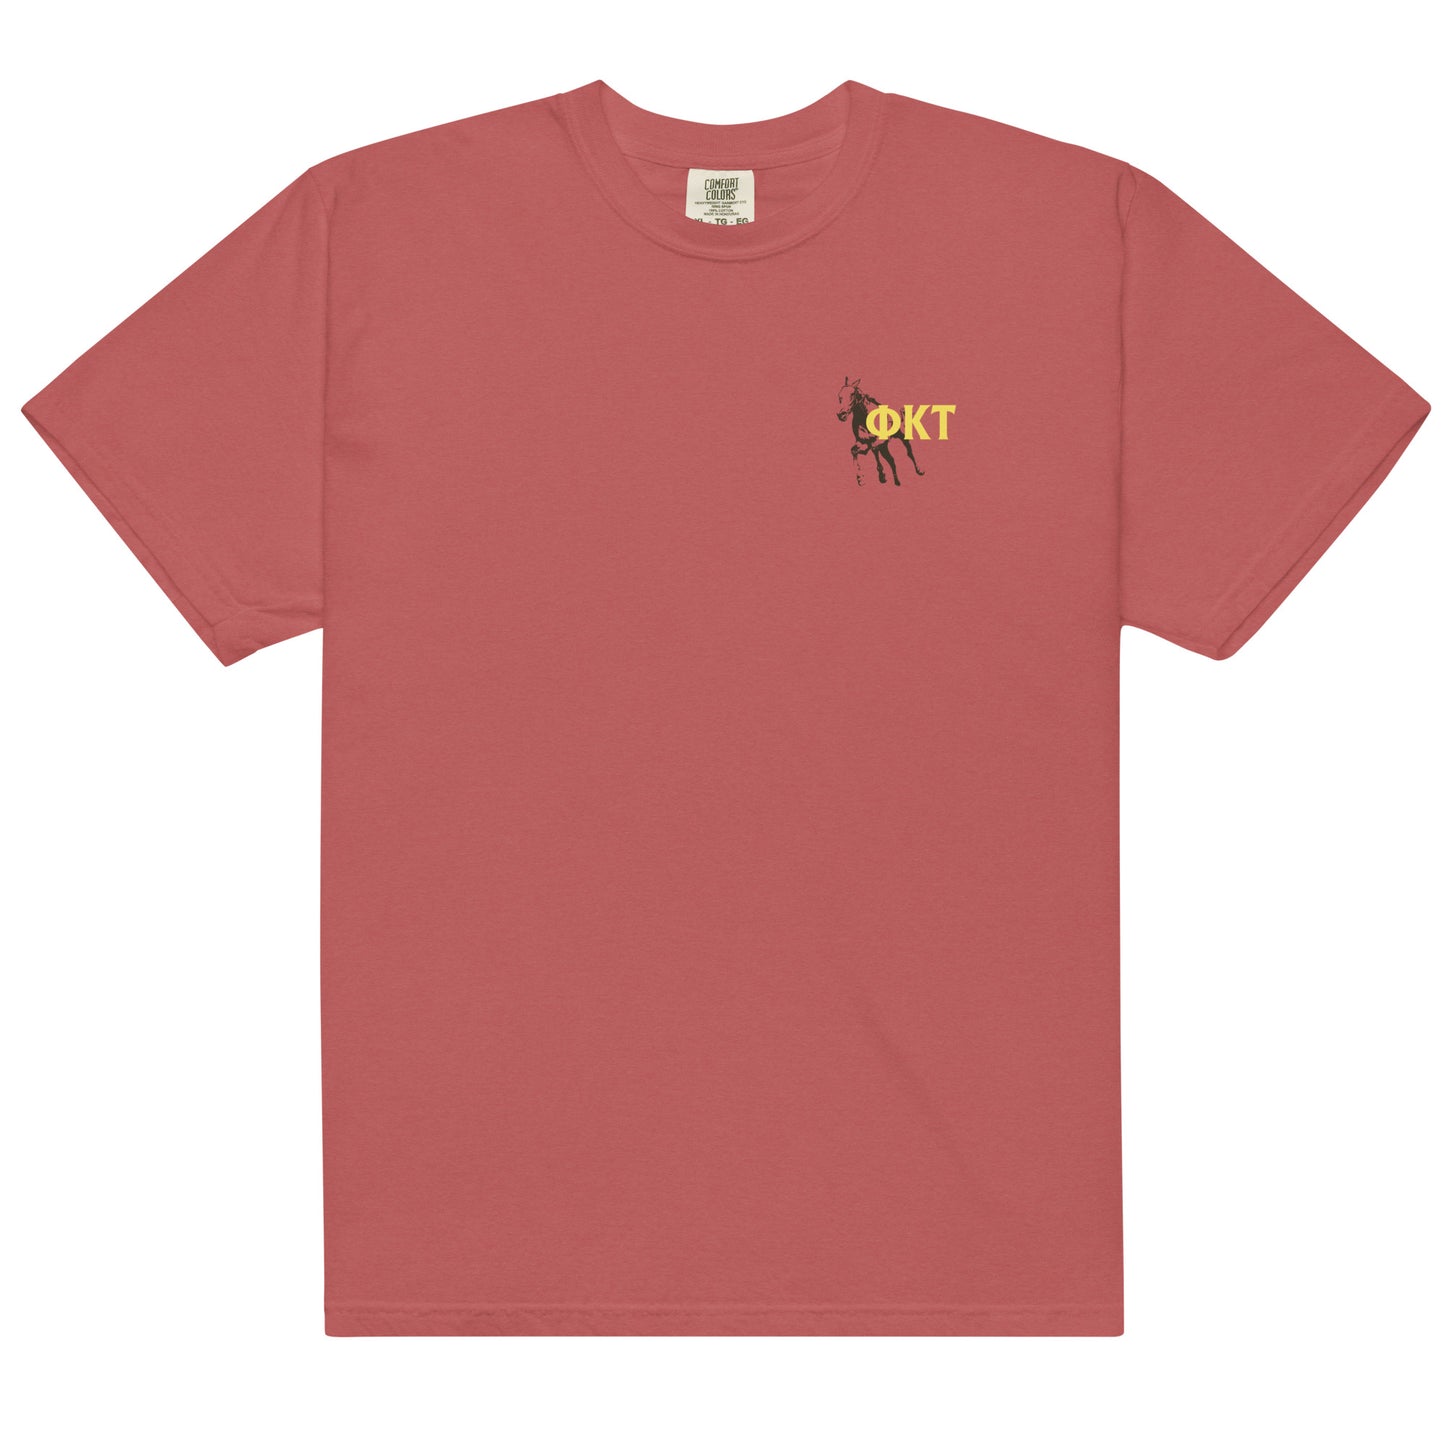 Drop 003: Phi Tau Derby T-Shirt by Comfort Colors